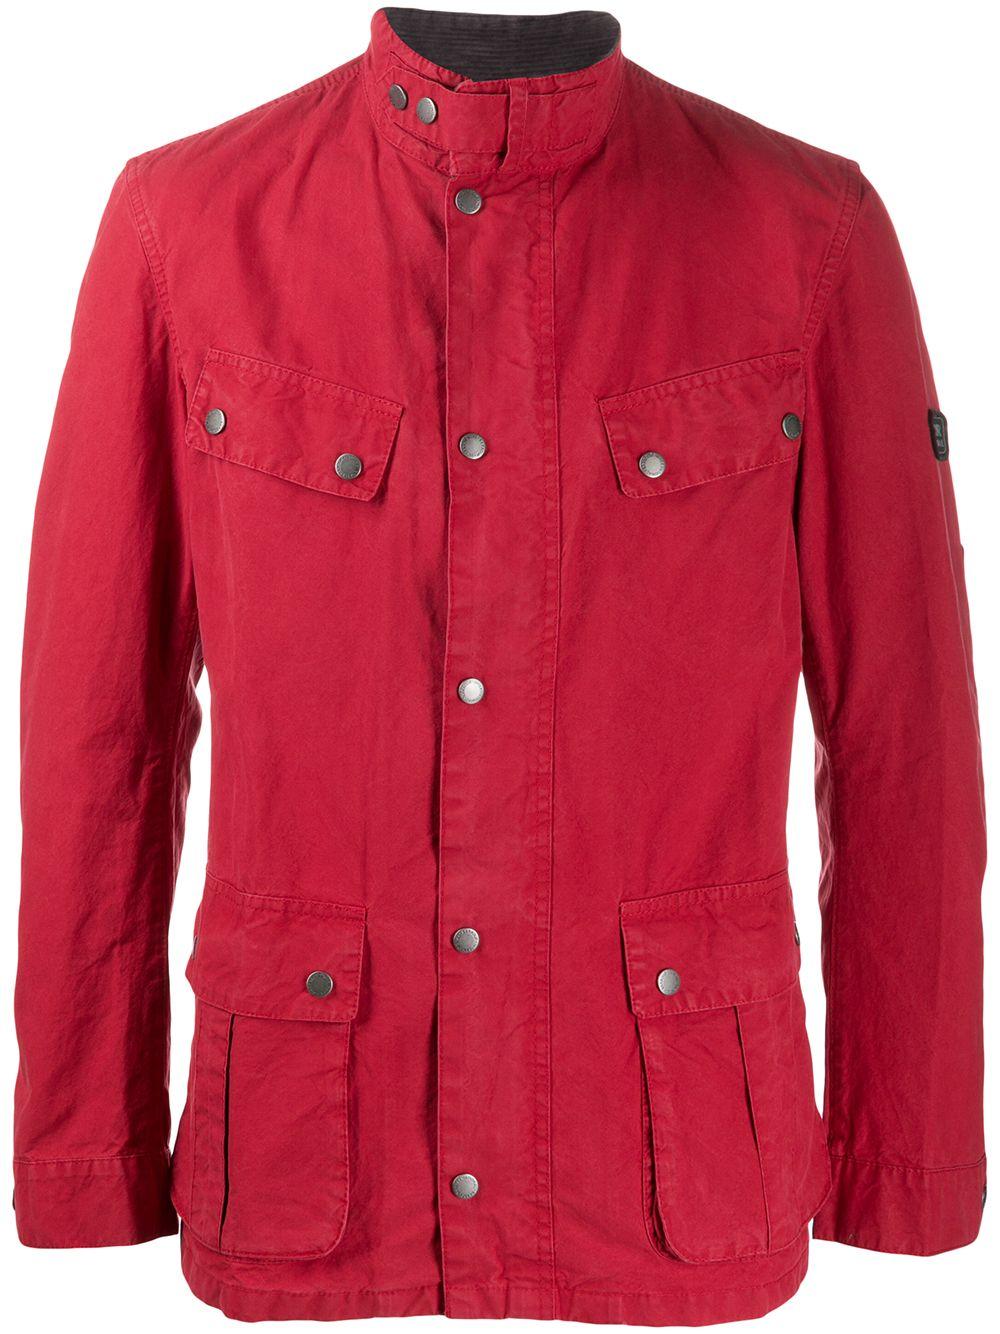 Barbour Cotton Short Lightweight Jacket in Red for Men - Lyst